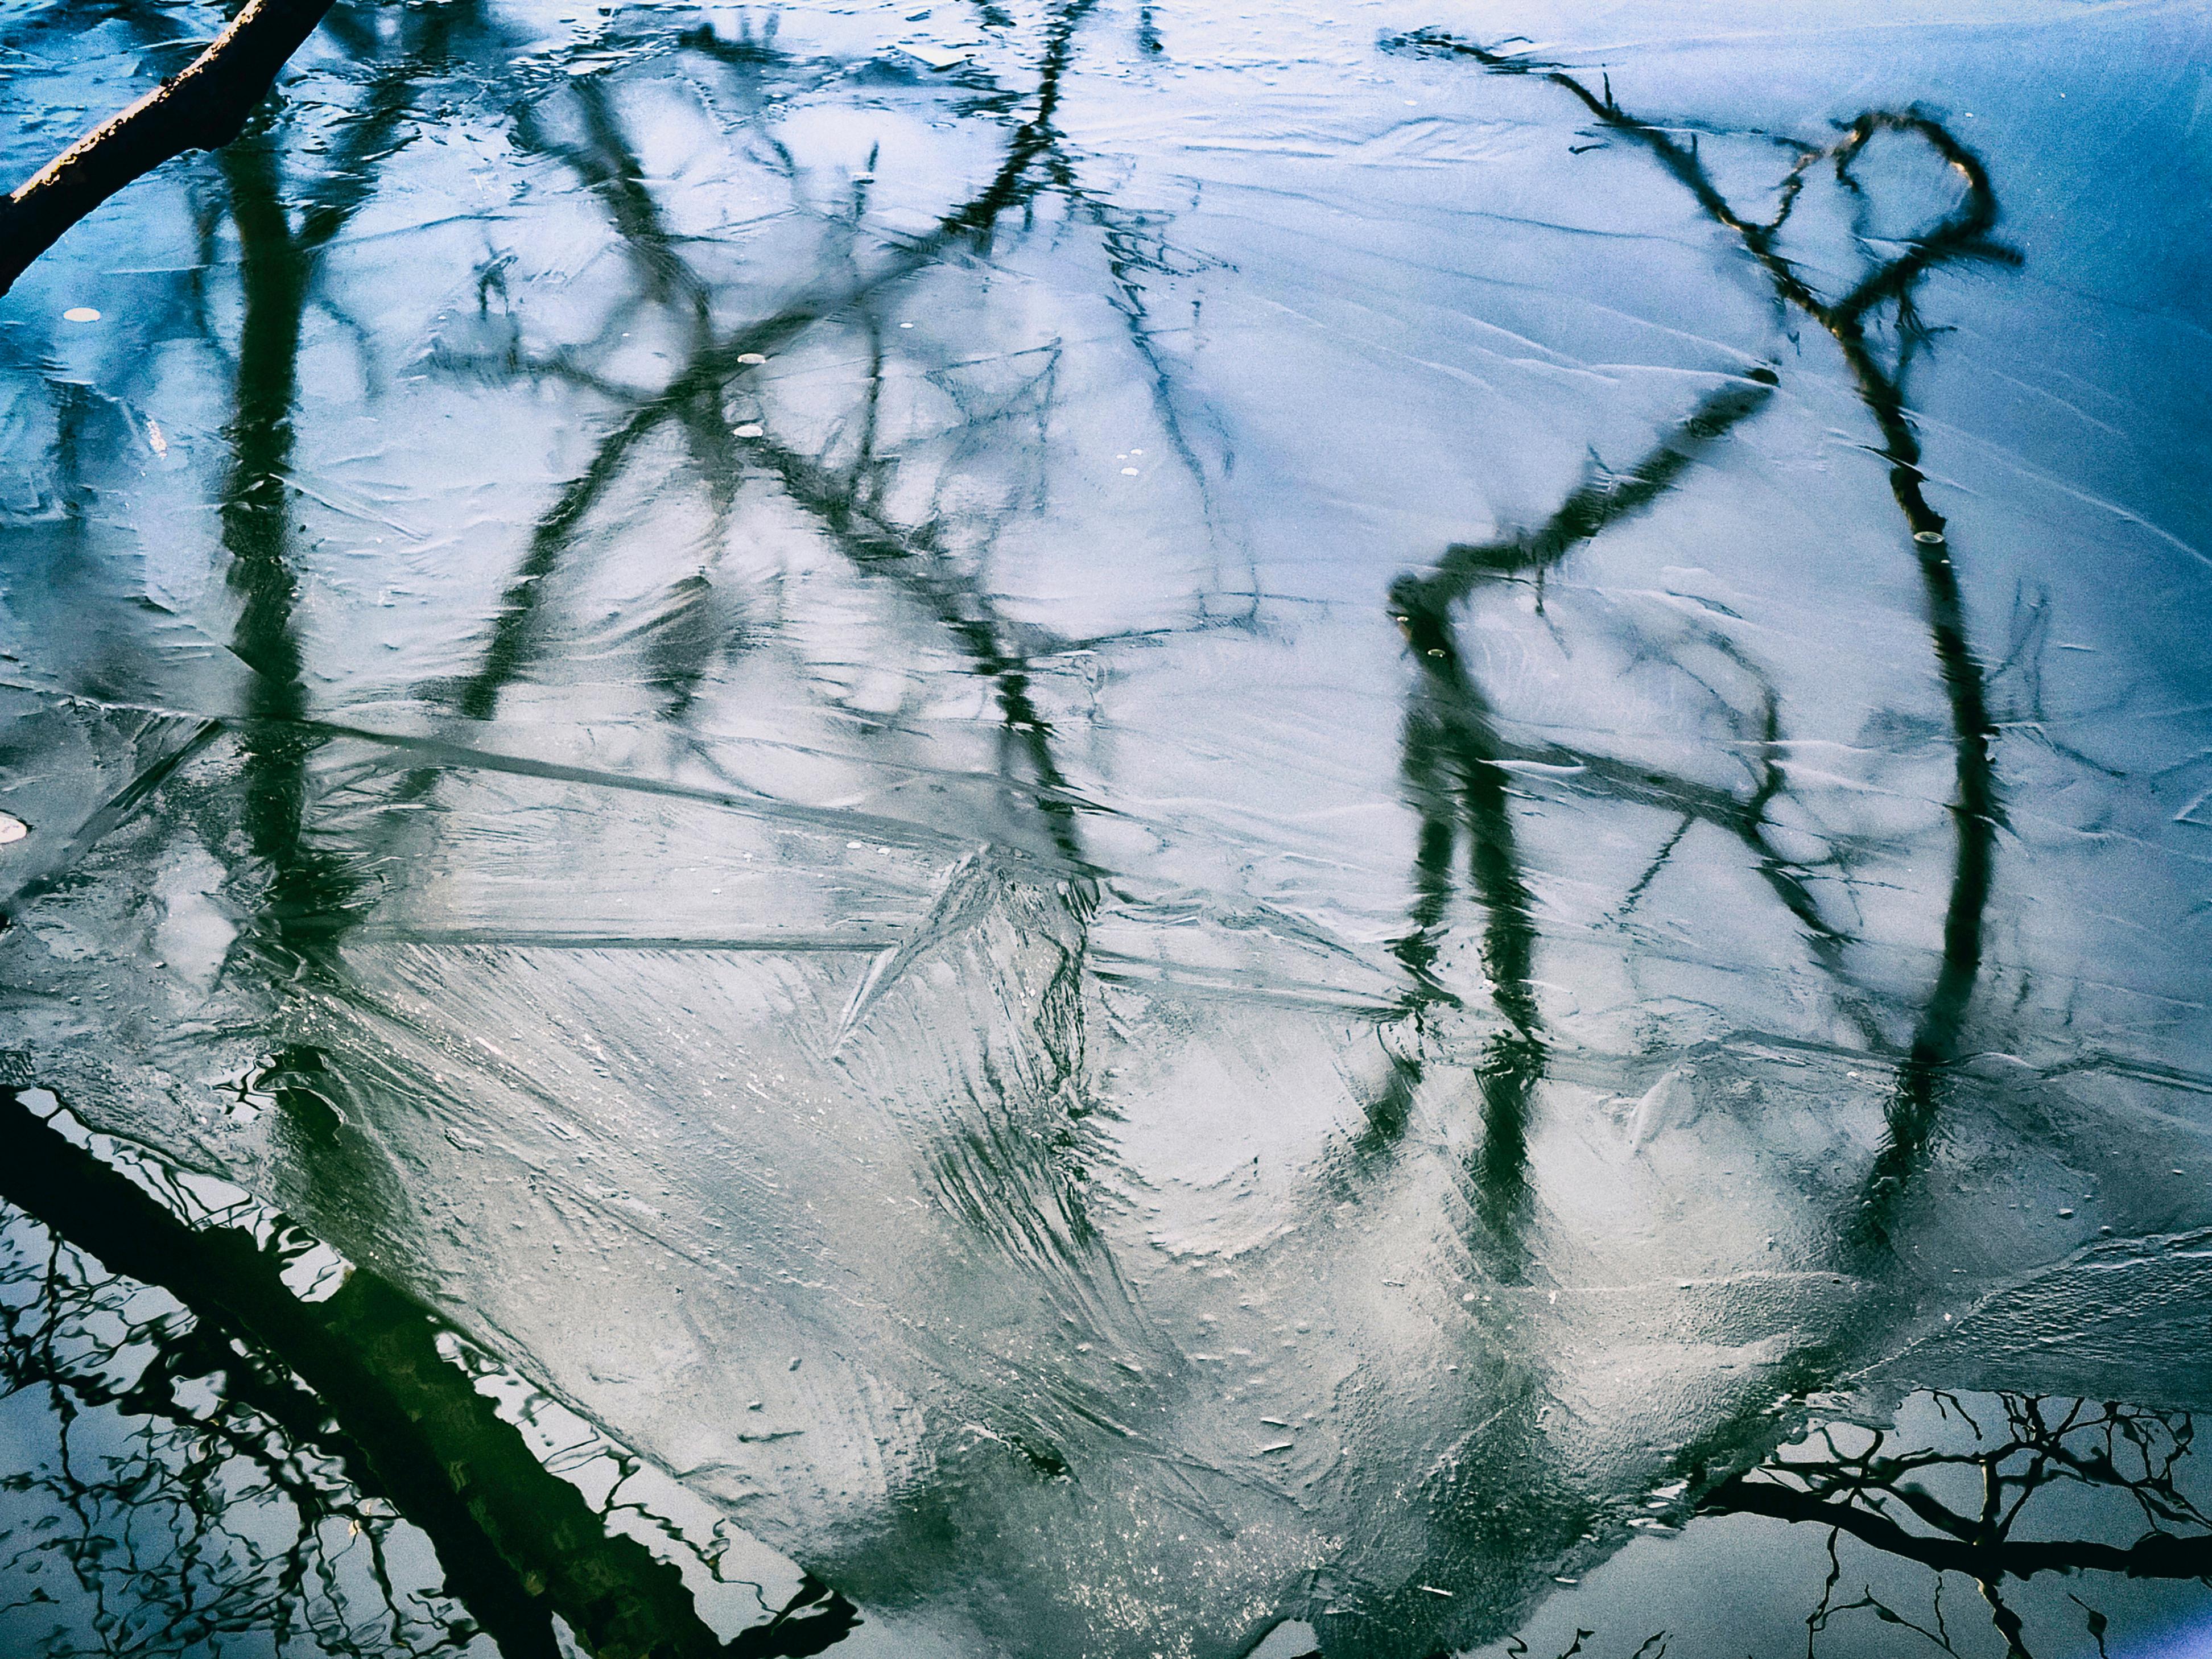 Marc Garrison Landscape Photograph - Ice Art, Winter Scene Nature Photography Print, 2015